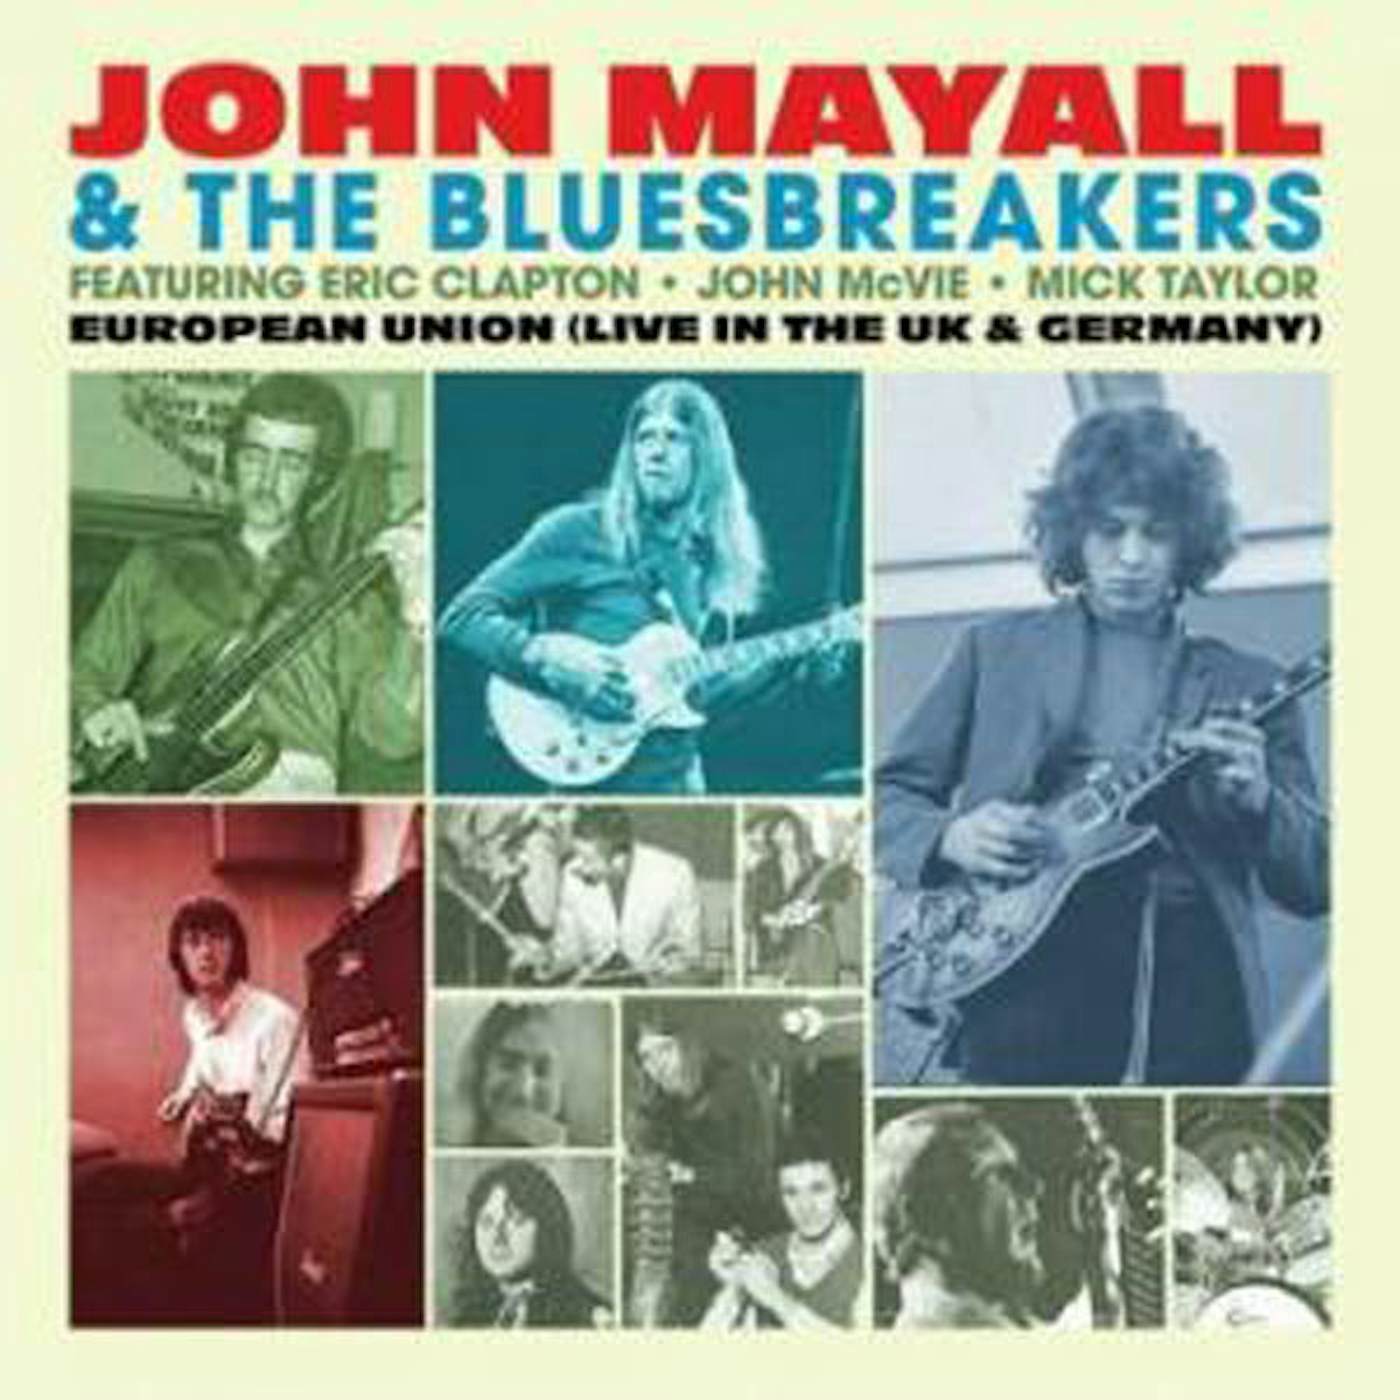 John Mayall & The Bluesbreakers LP - European Union (Live In The Uk & Germany) Light Blue Vinyl Limited